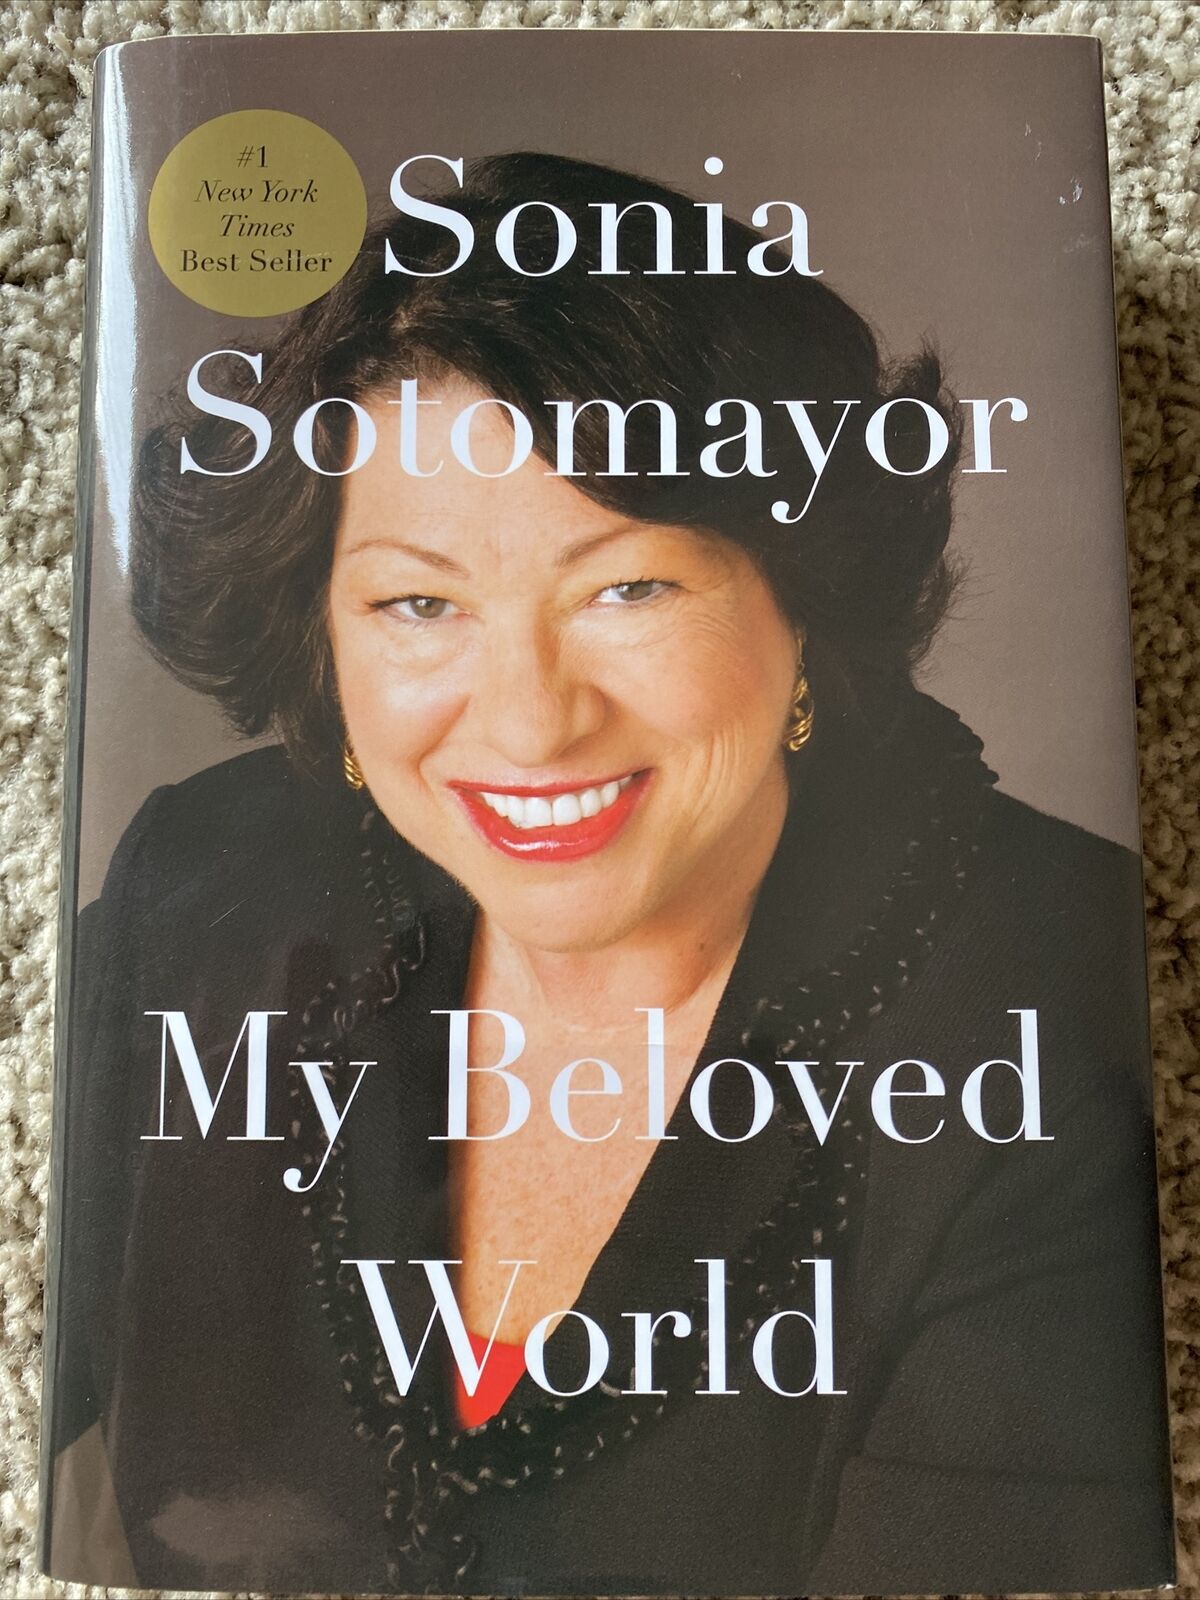 Sonia Sotomayor *SIGNED* My Beloved World - US Supreme Court Justice